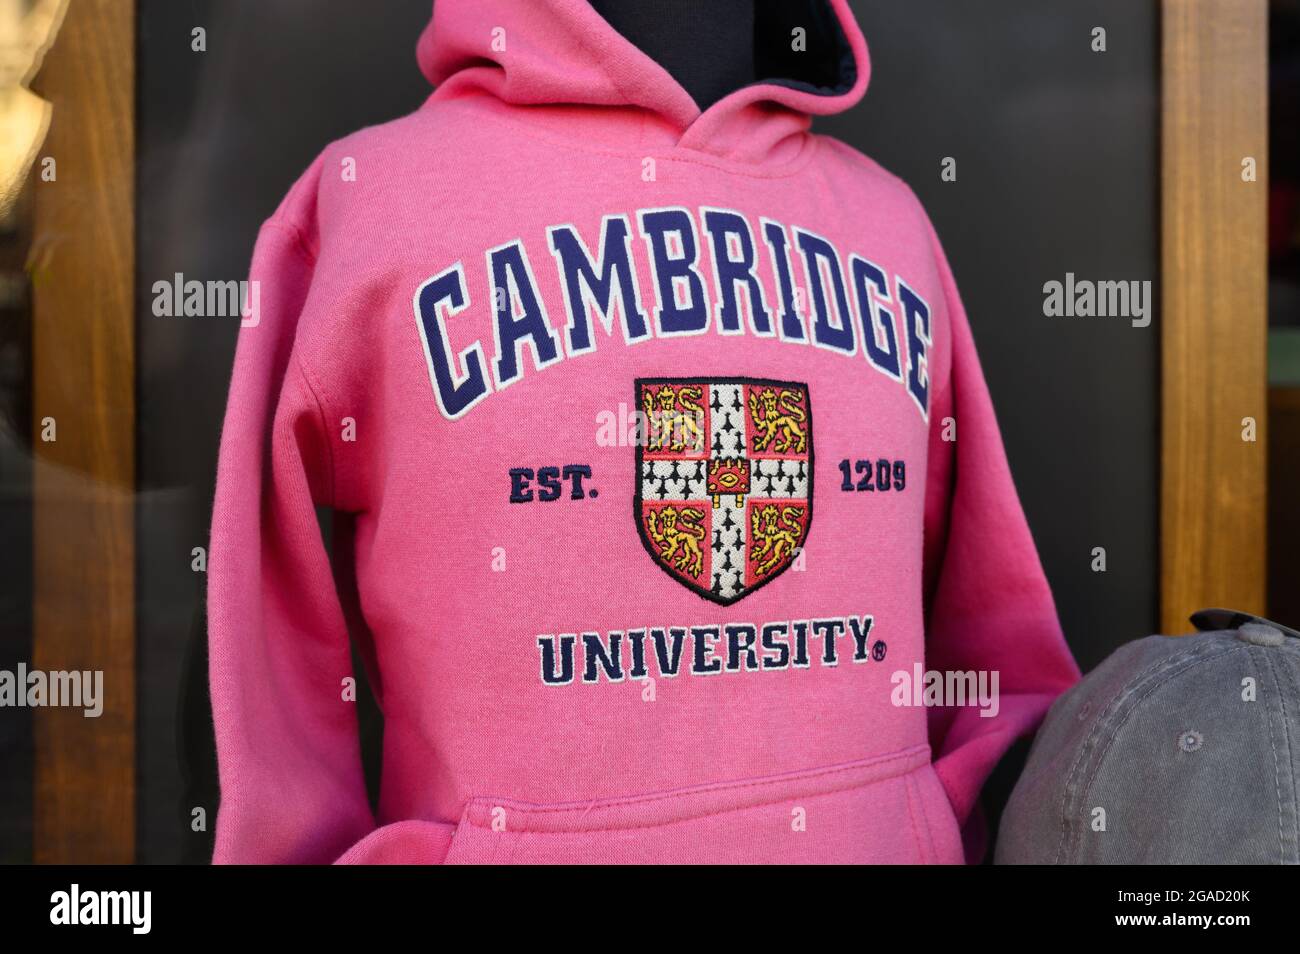 Pink University of Cambridge hoodie or sweatshirt in a shop window. Stock Photo